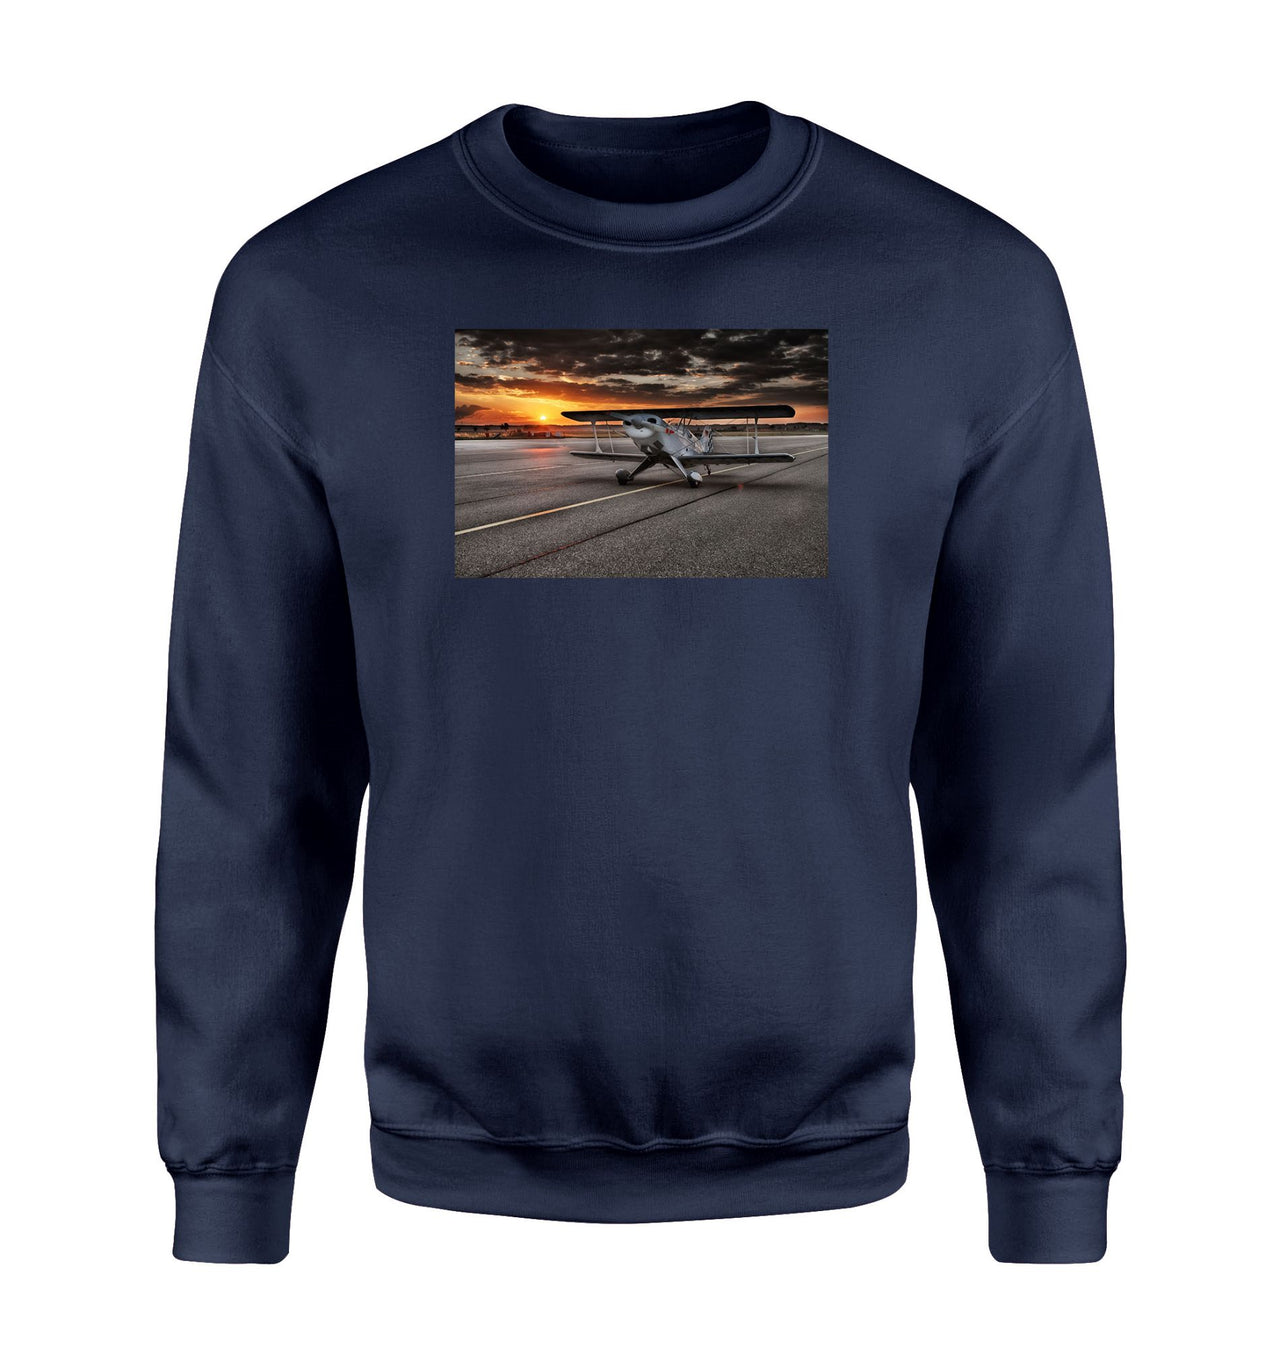 Beautiful Show Airplane Designed Sweatshirts